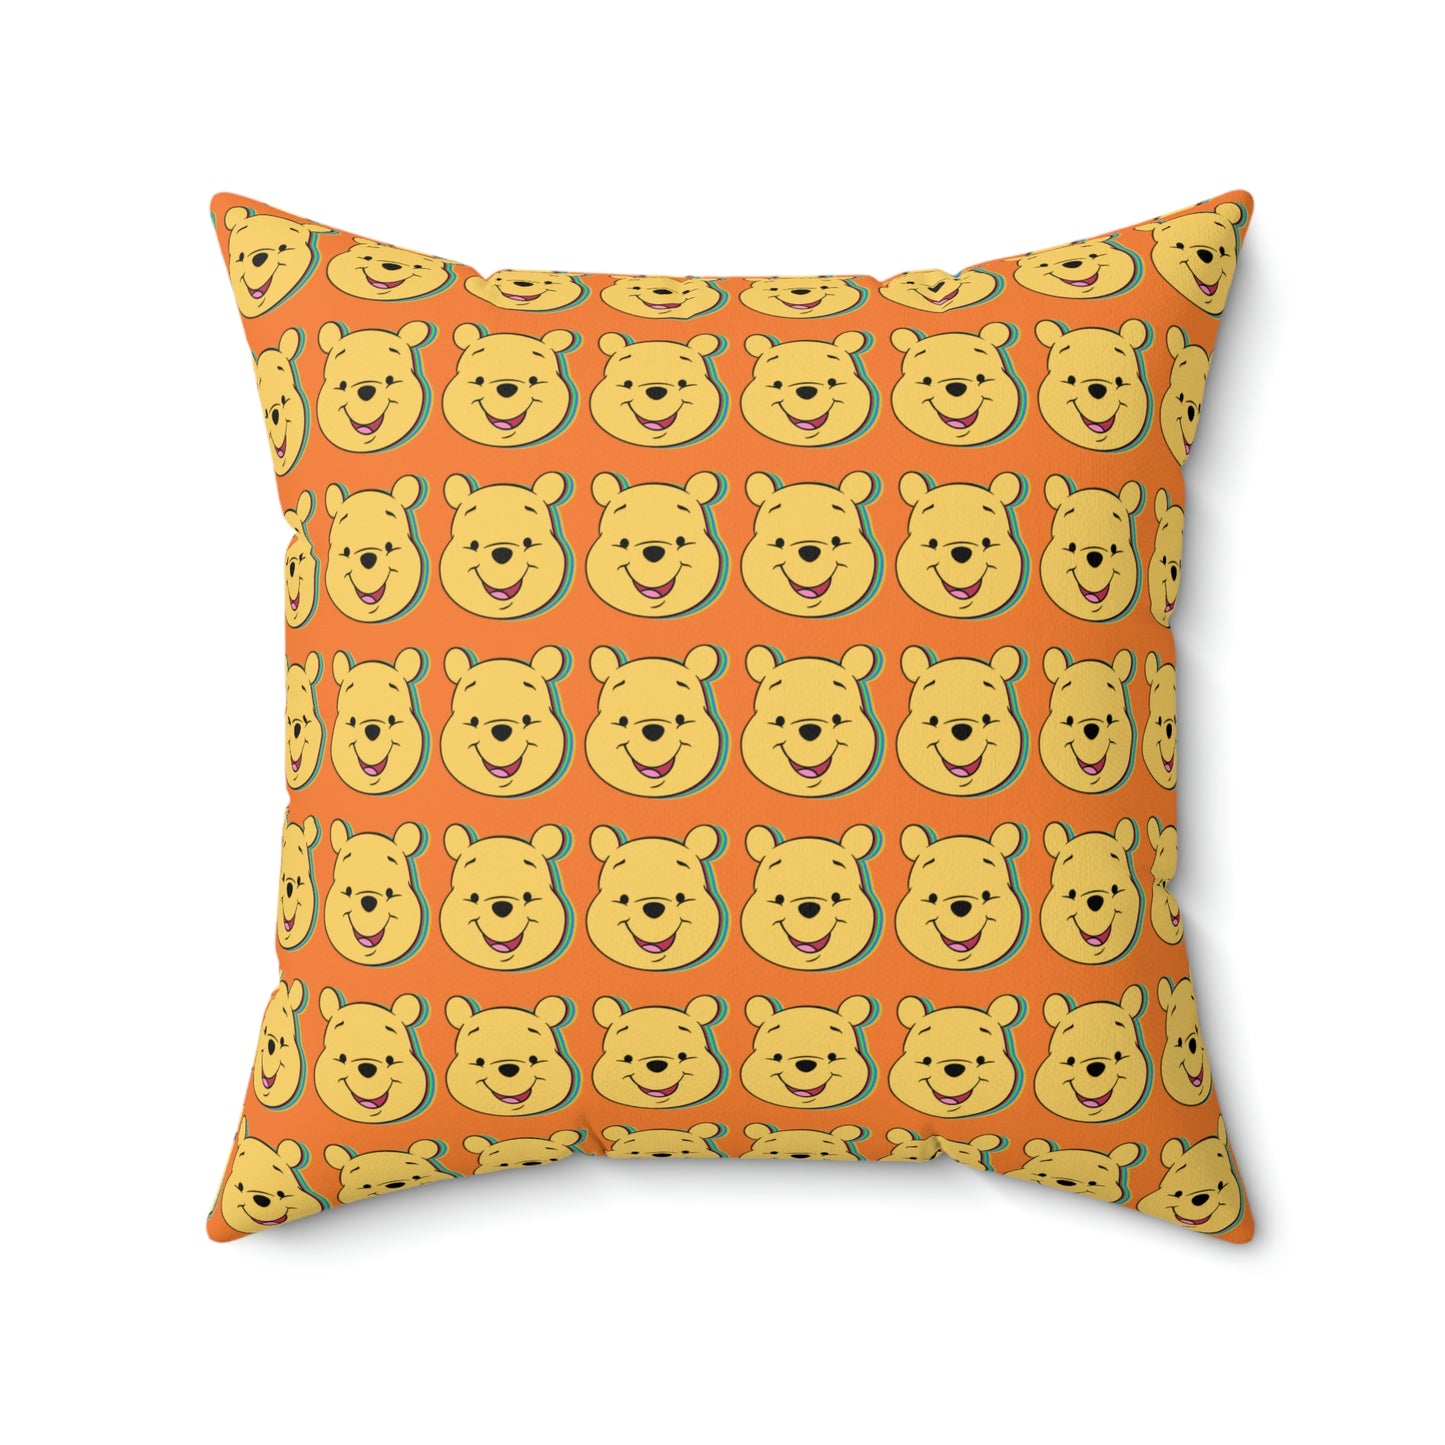 Spun Polyester Square Pillow Case “Trip Pooh on Crusta”